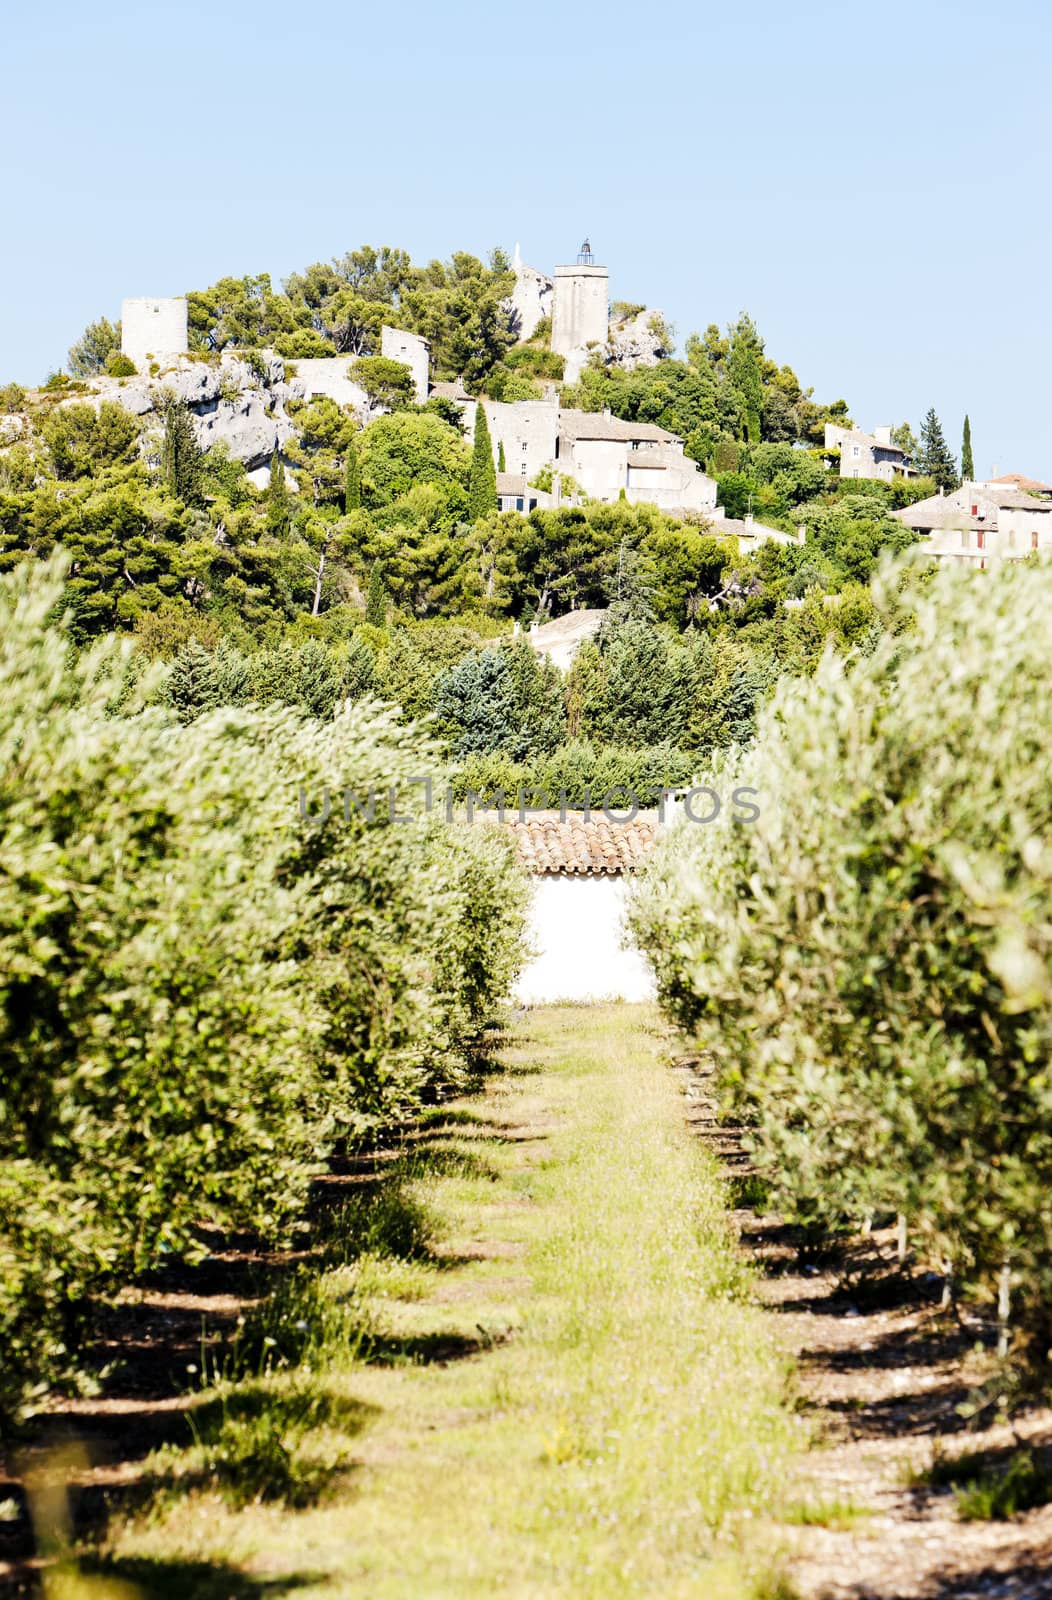 Eygalieres, Provence, France